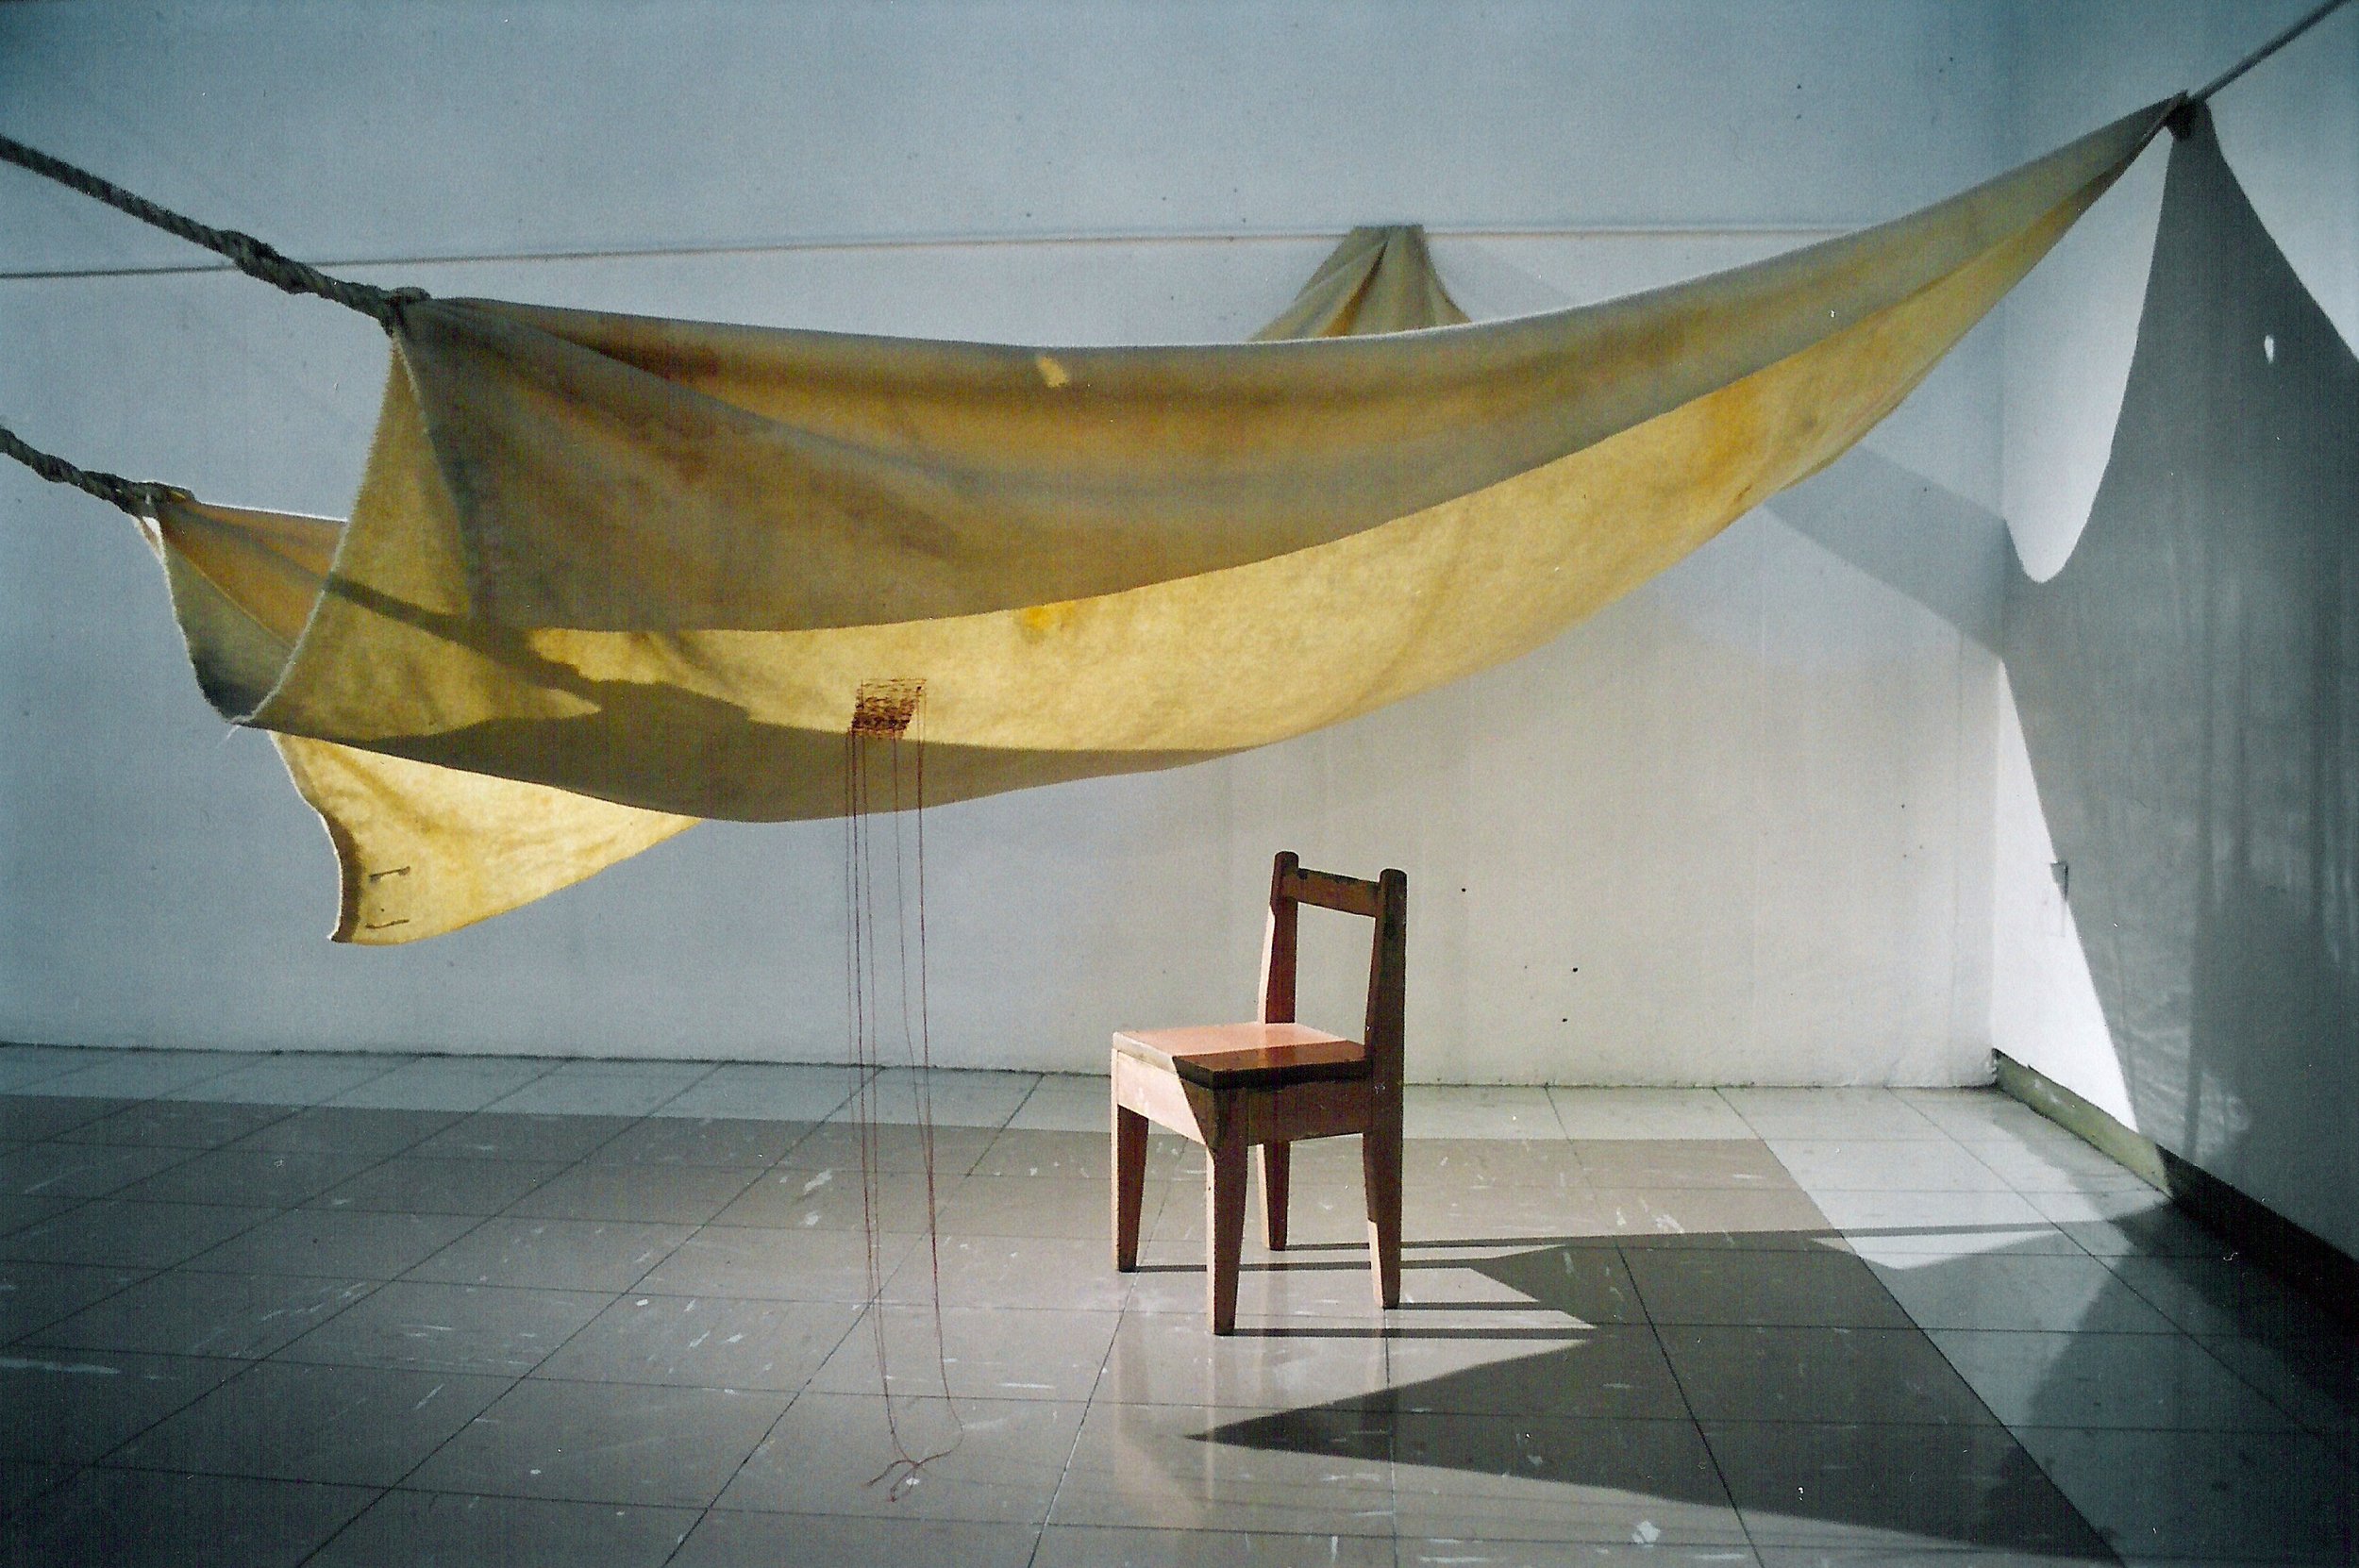  Shelter.    rope, blanket, thread, child’s chair. 2000.  CoCA. Ōtautahi. NZ. 